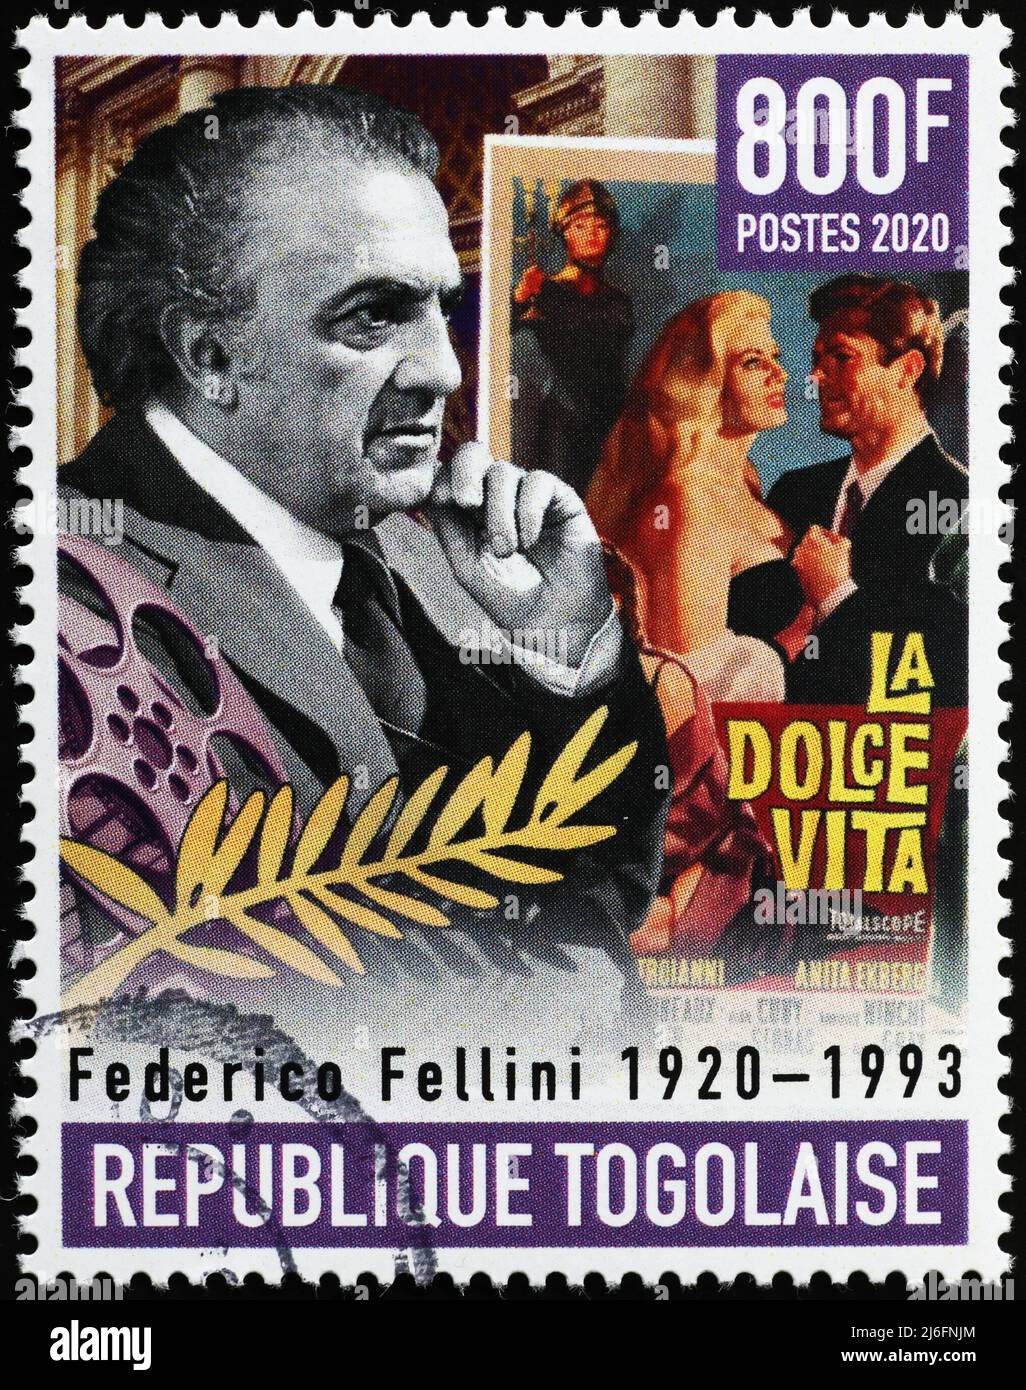 Celebration of Federico Fellini on postage stamp Stock Photo